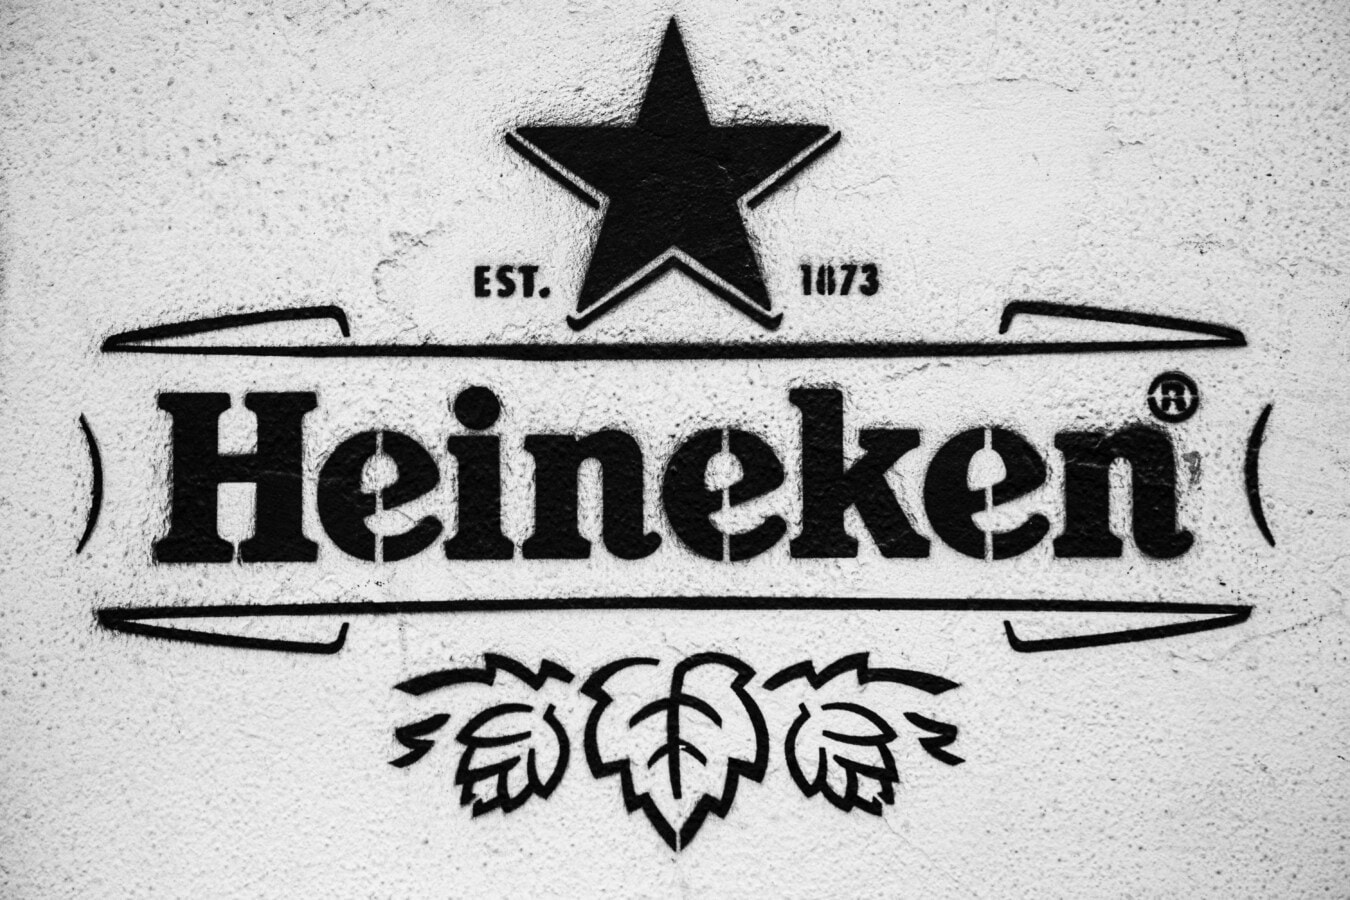 Heineken, Είσοδος, σύμβολο, μαύρο και άσπρο, μονόχρωμη, μαύρο, κείμενο, υφή, παλιάς χρονολογίας, Εικονογράφηση